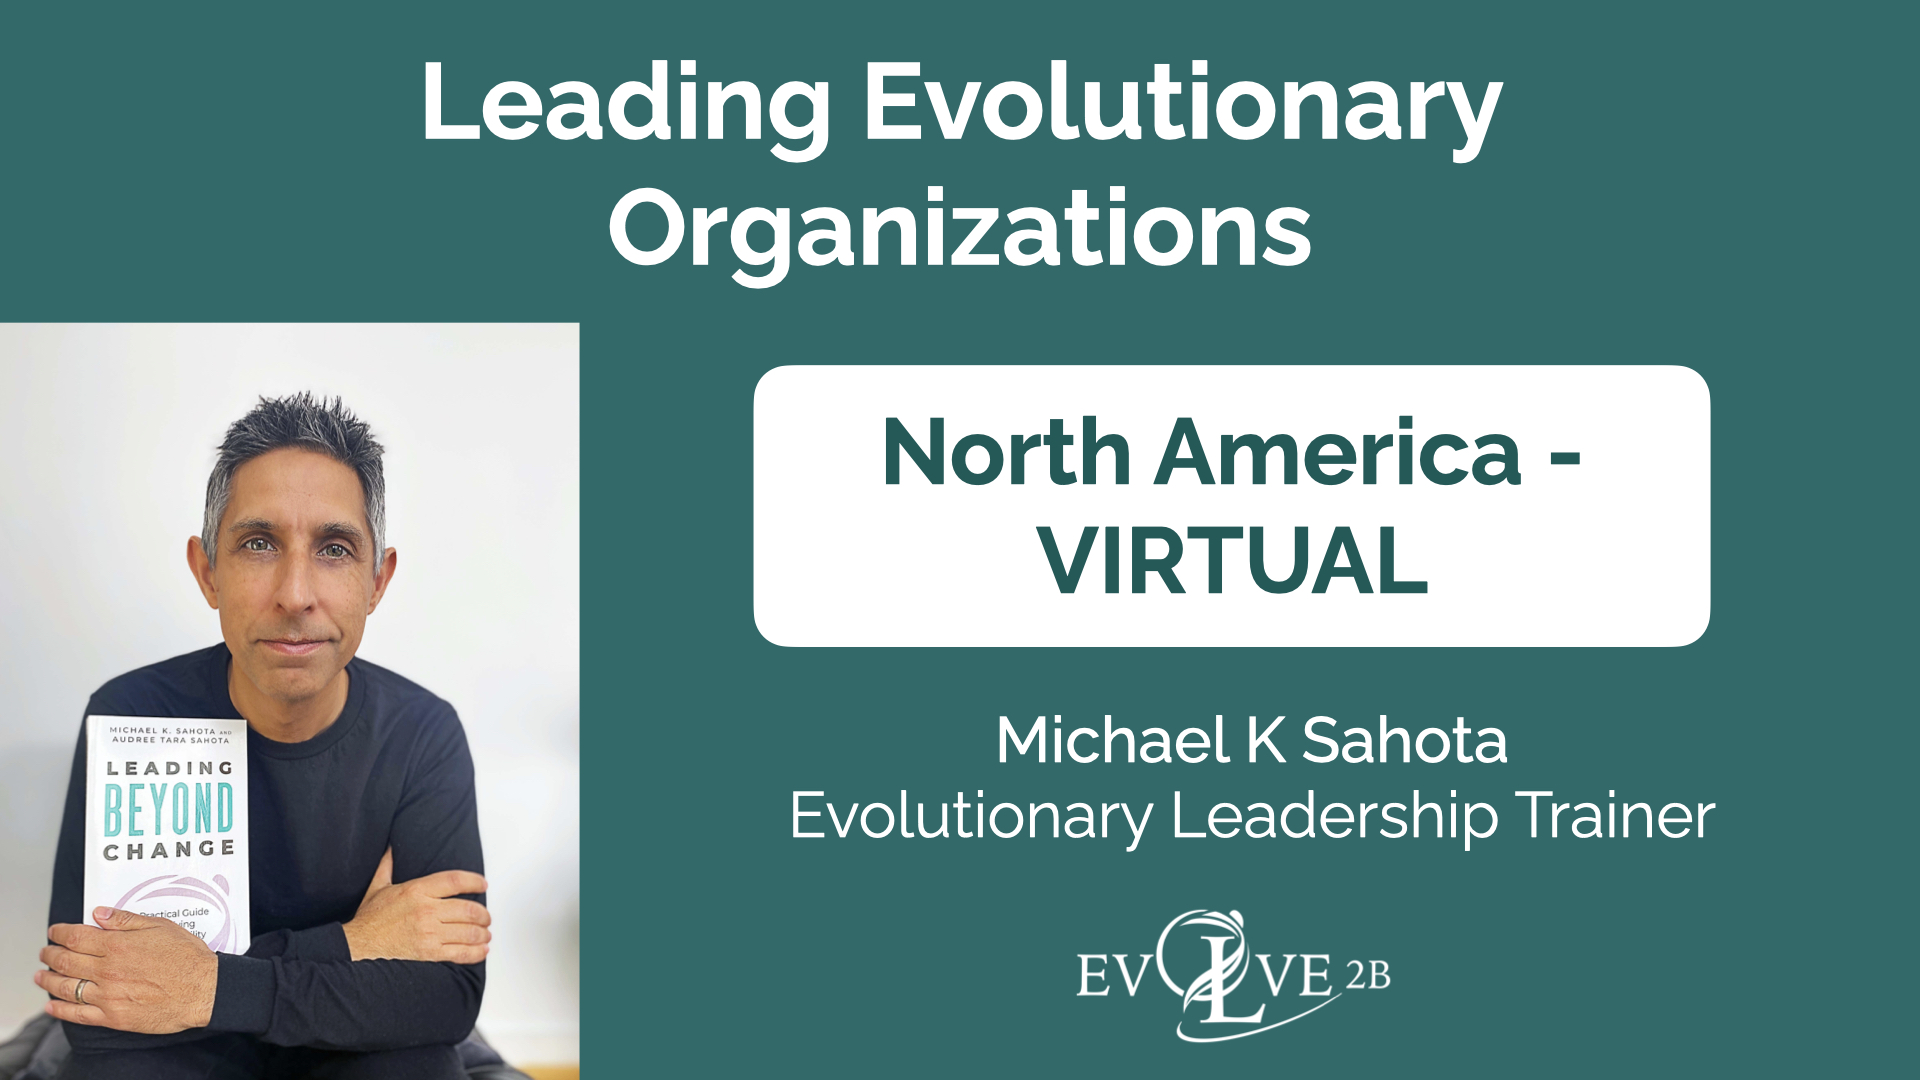 Leading Evolutionary Organizations - North America - Virtual